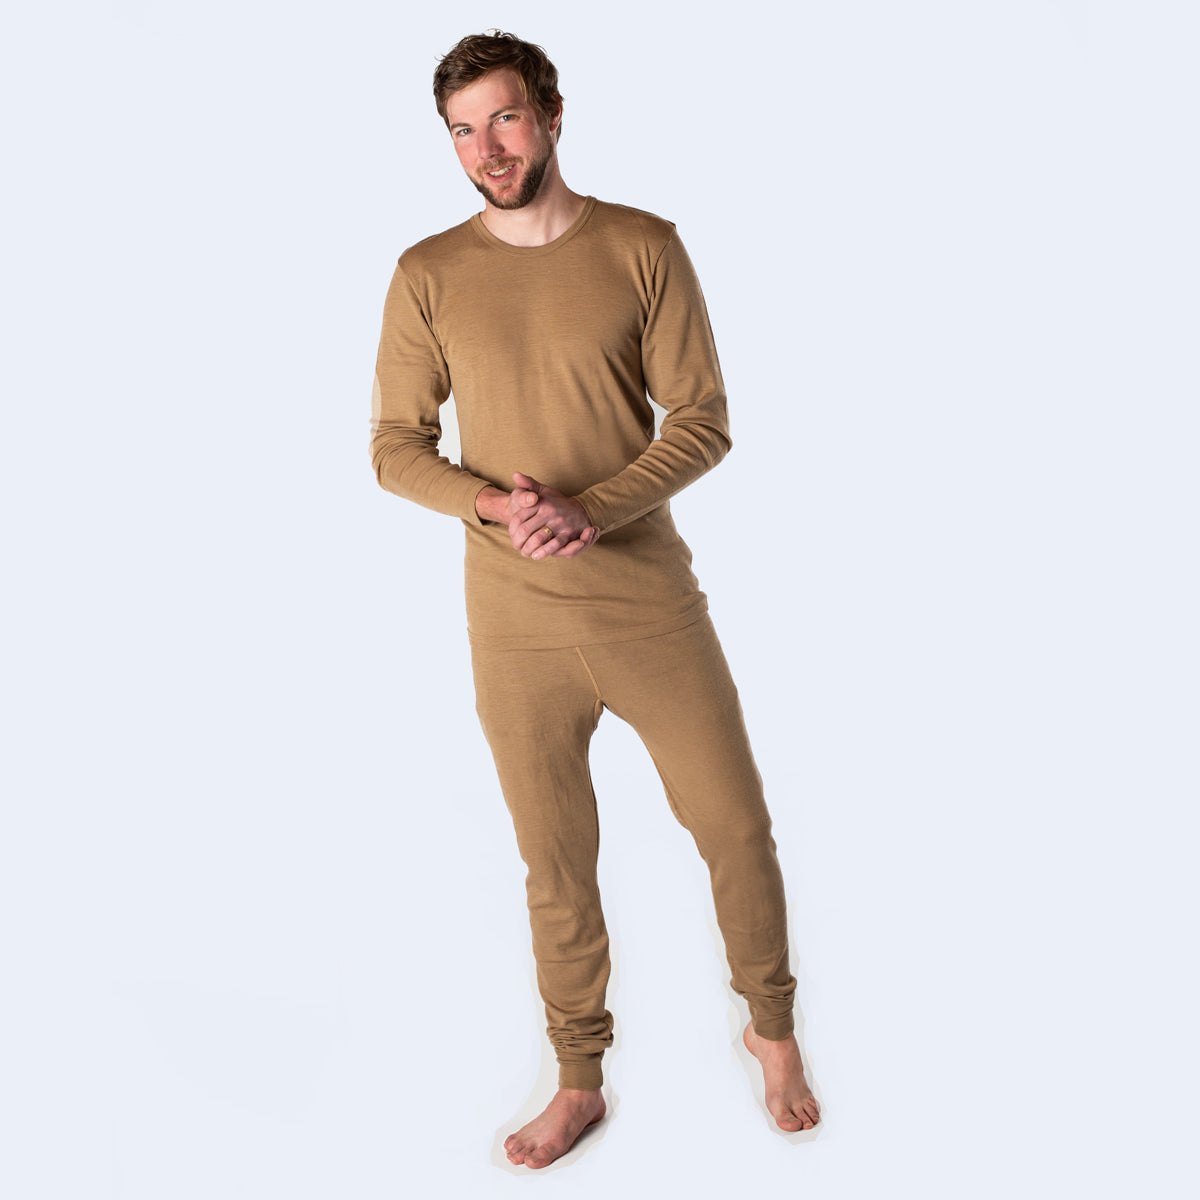 OUTLET HOCOSA "Sport" Organic Wool/Silk Long-Underwear Pants for Men or Women, Colors